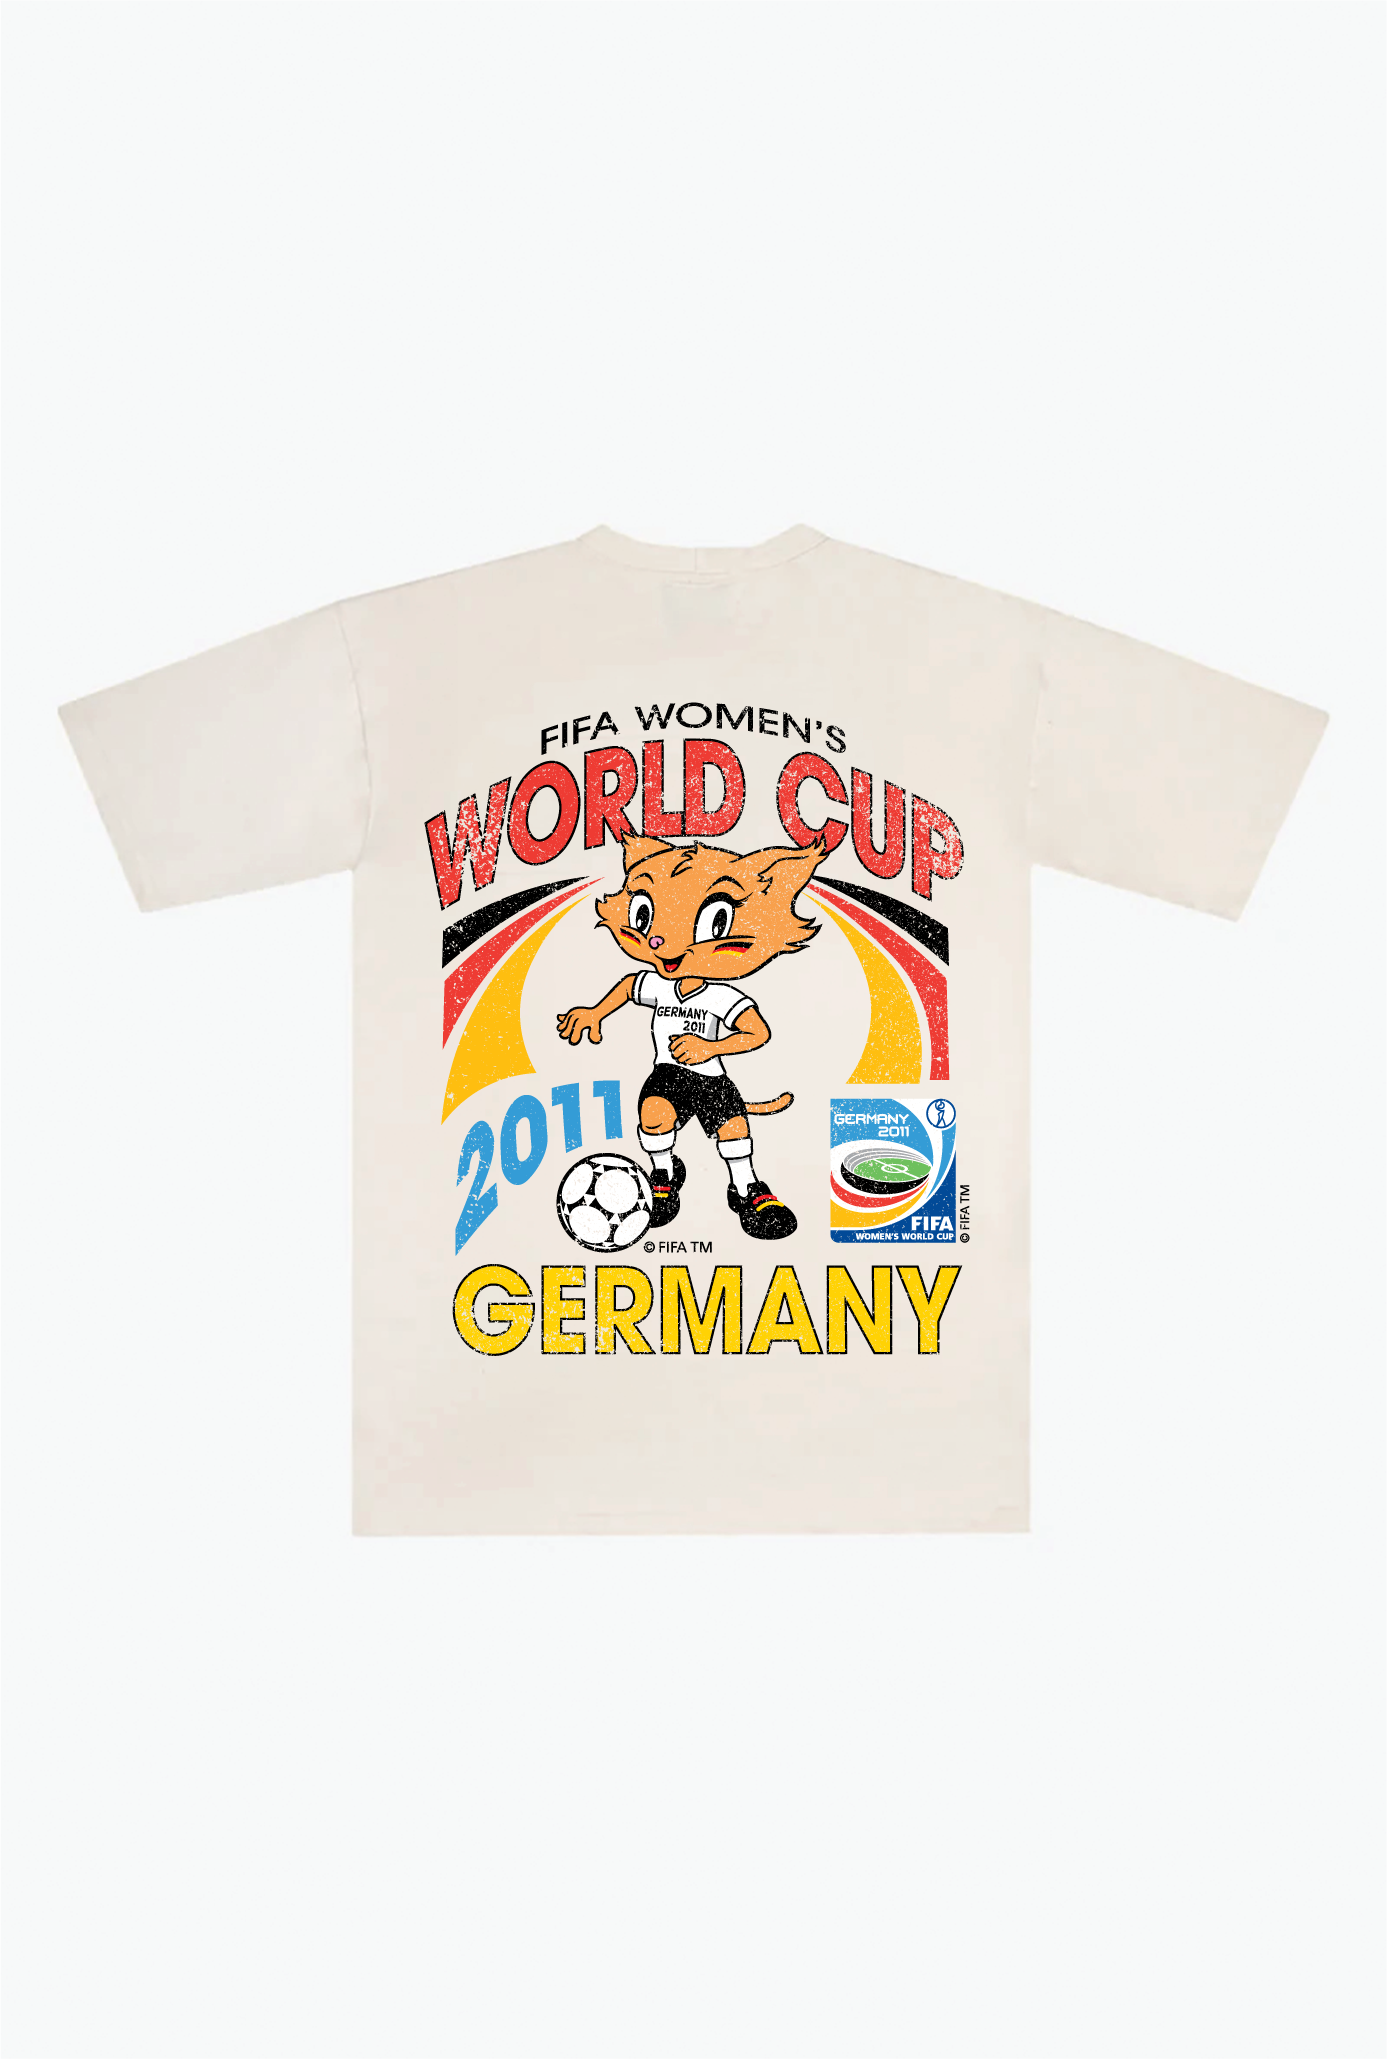 Germany 2011 World Cup Vintage Premium T-Shirt - ivory